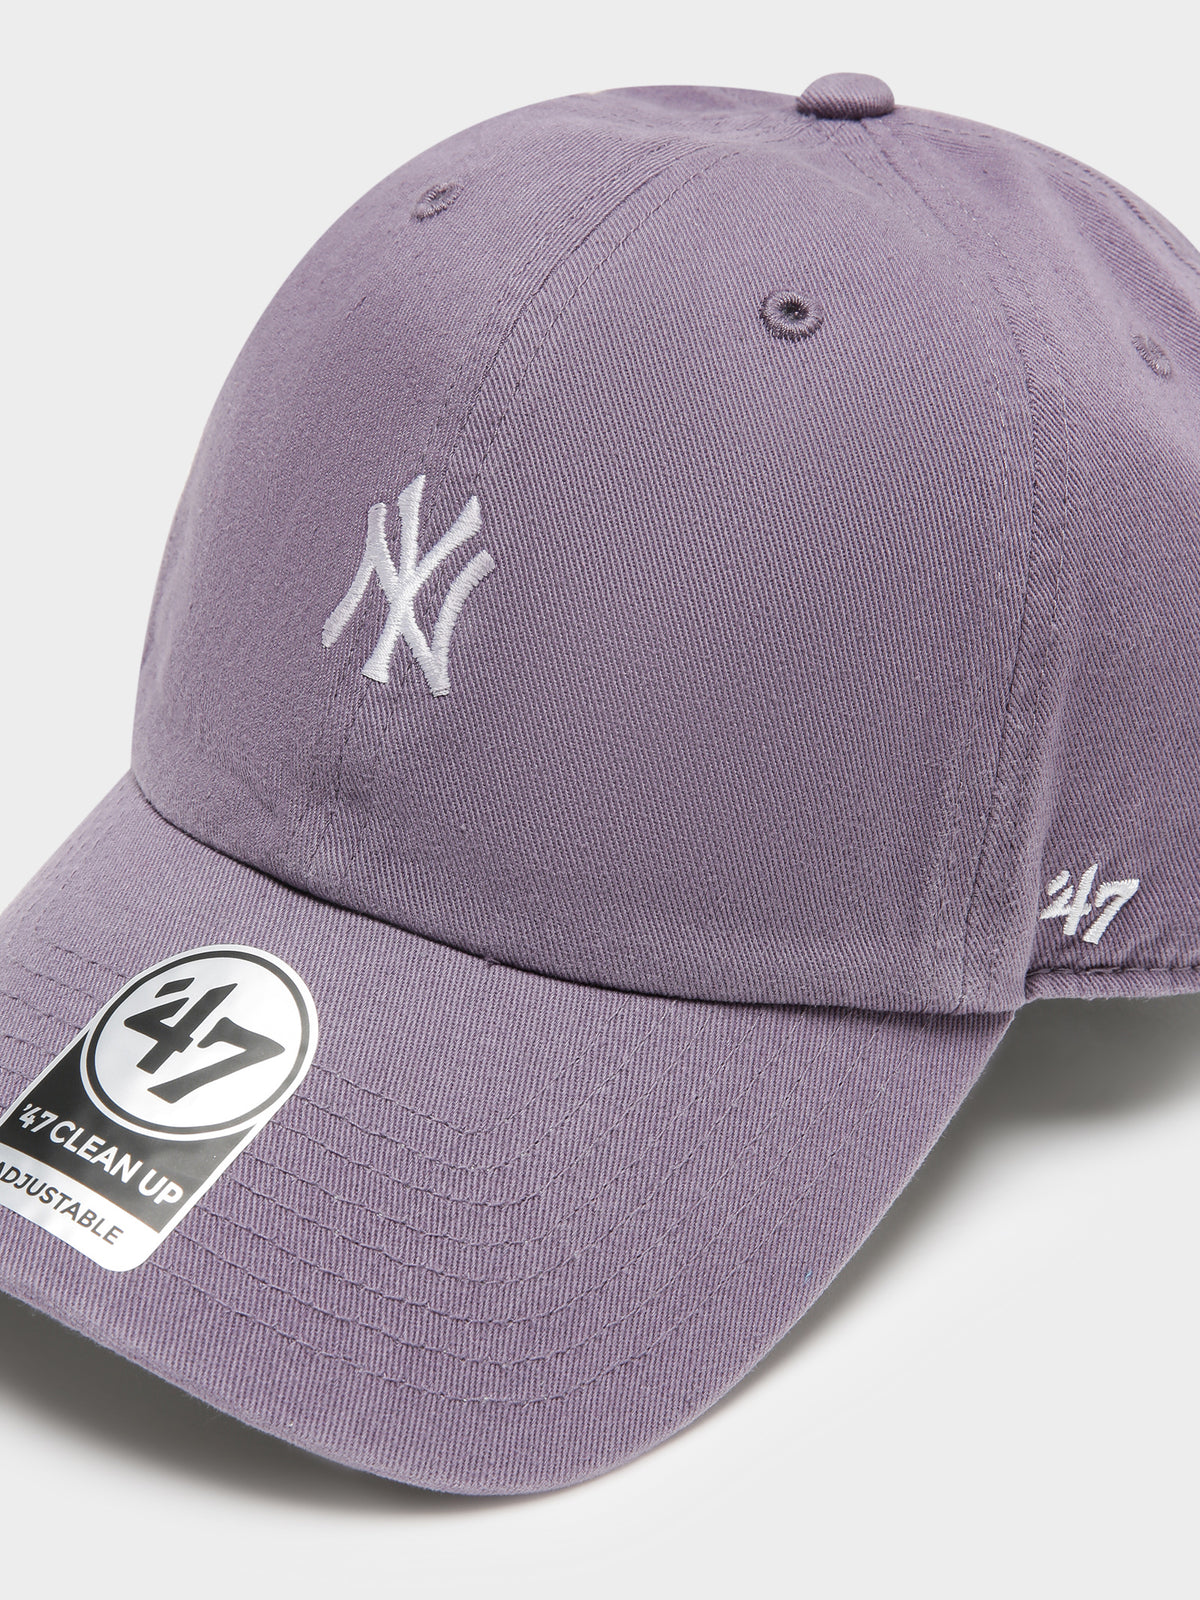 NY Yankees Baseball Cap in Purple